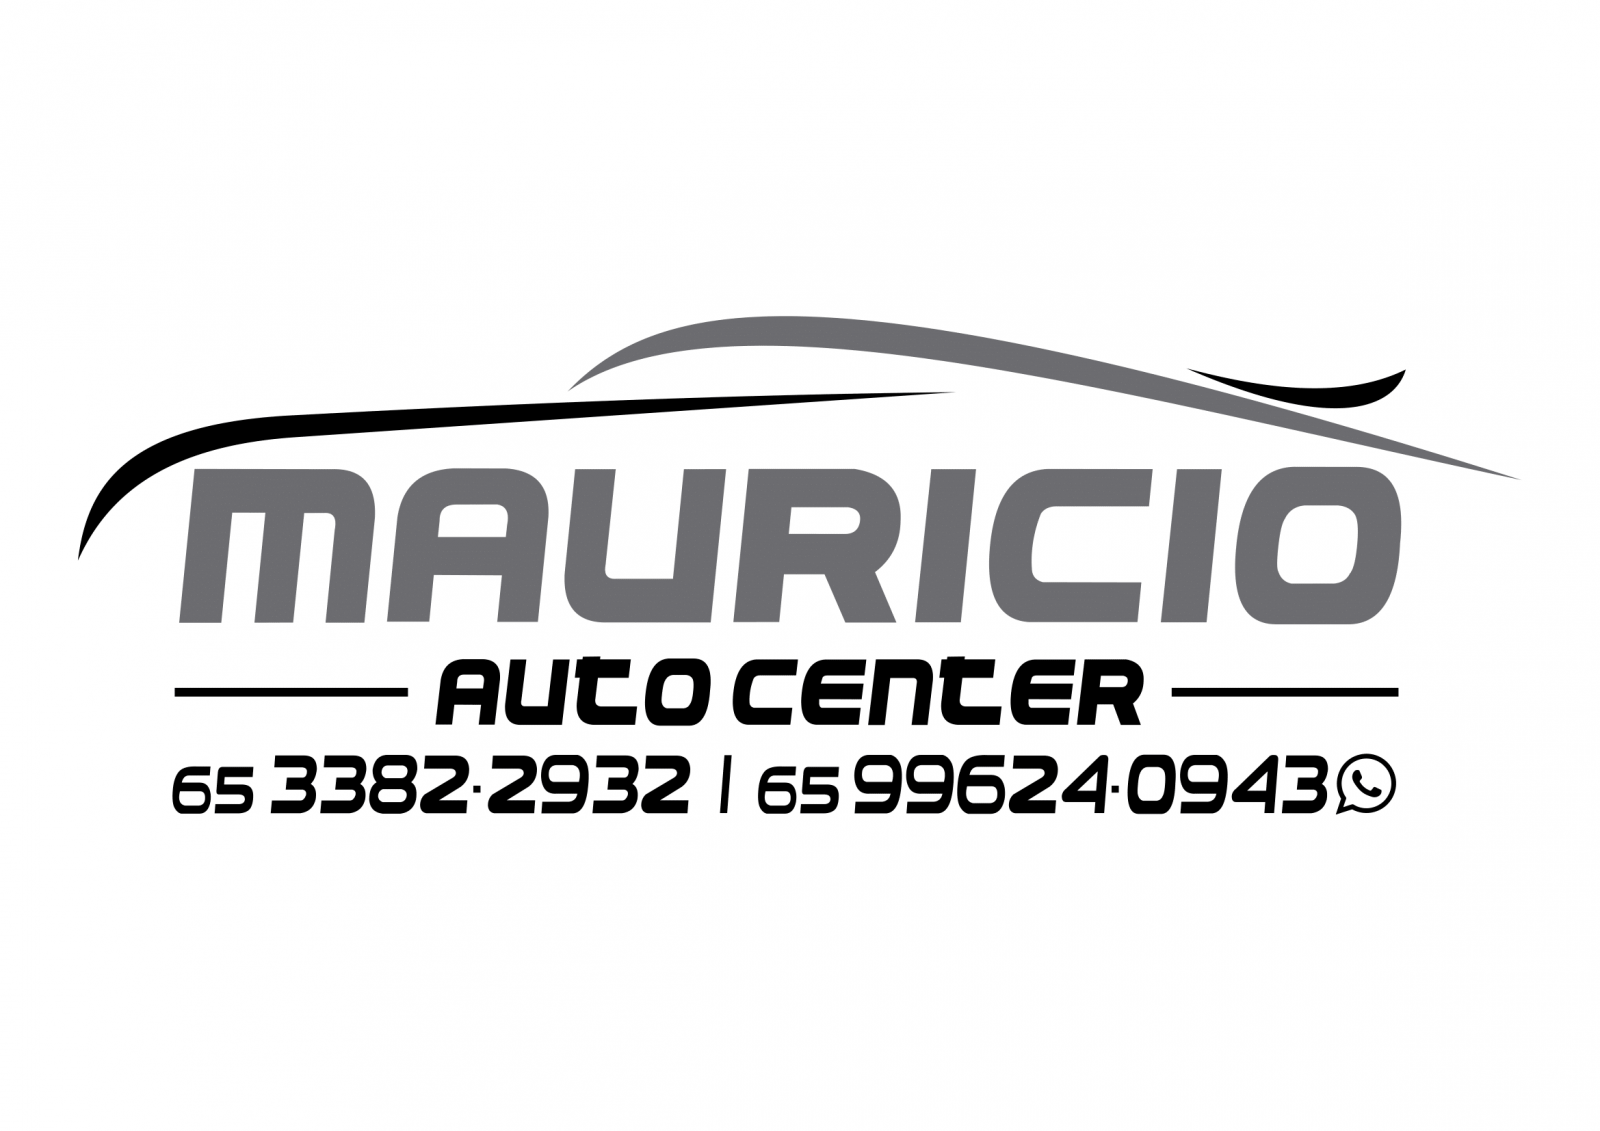 Mauricio Auto Center